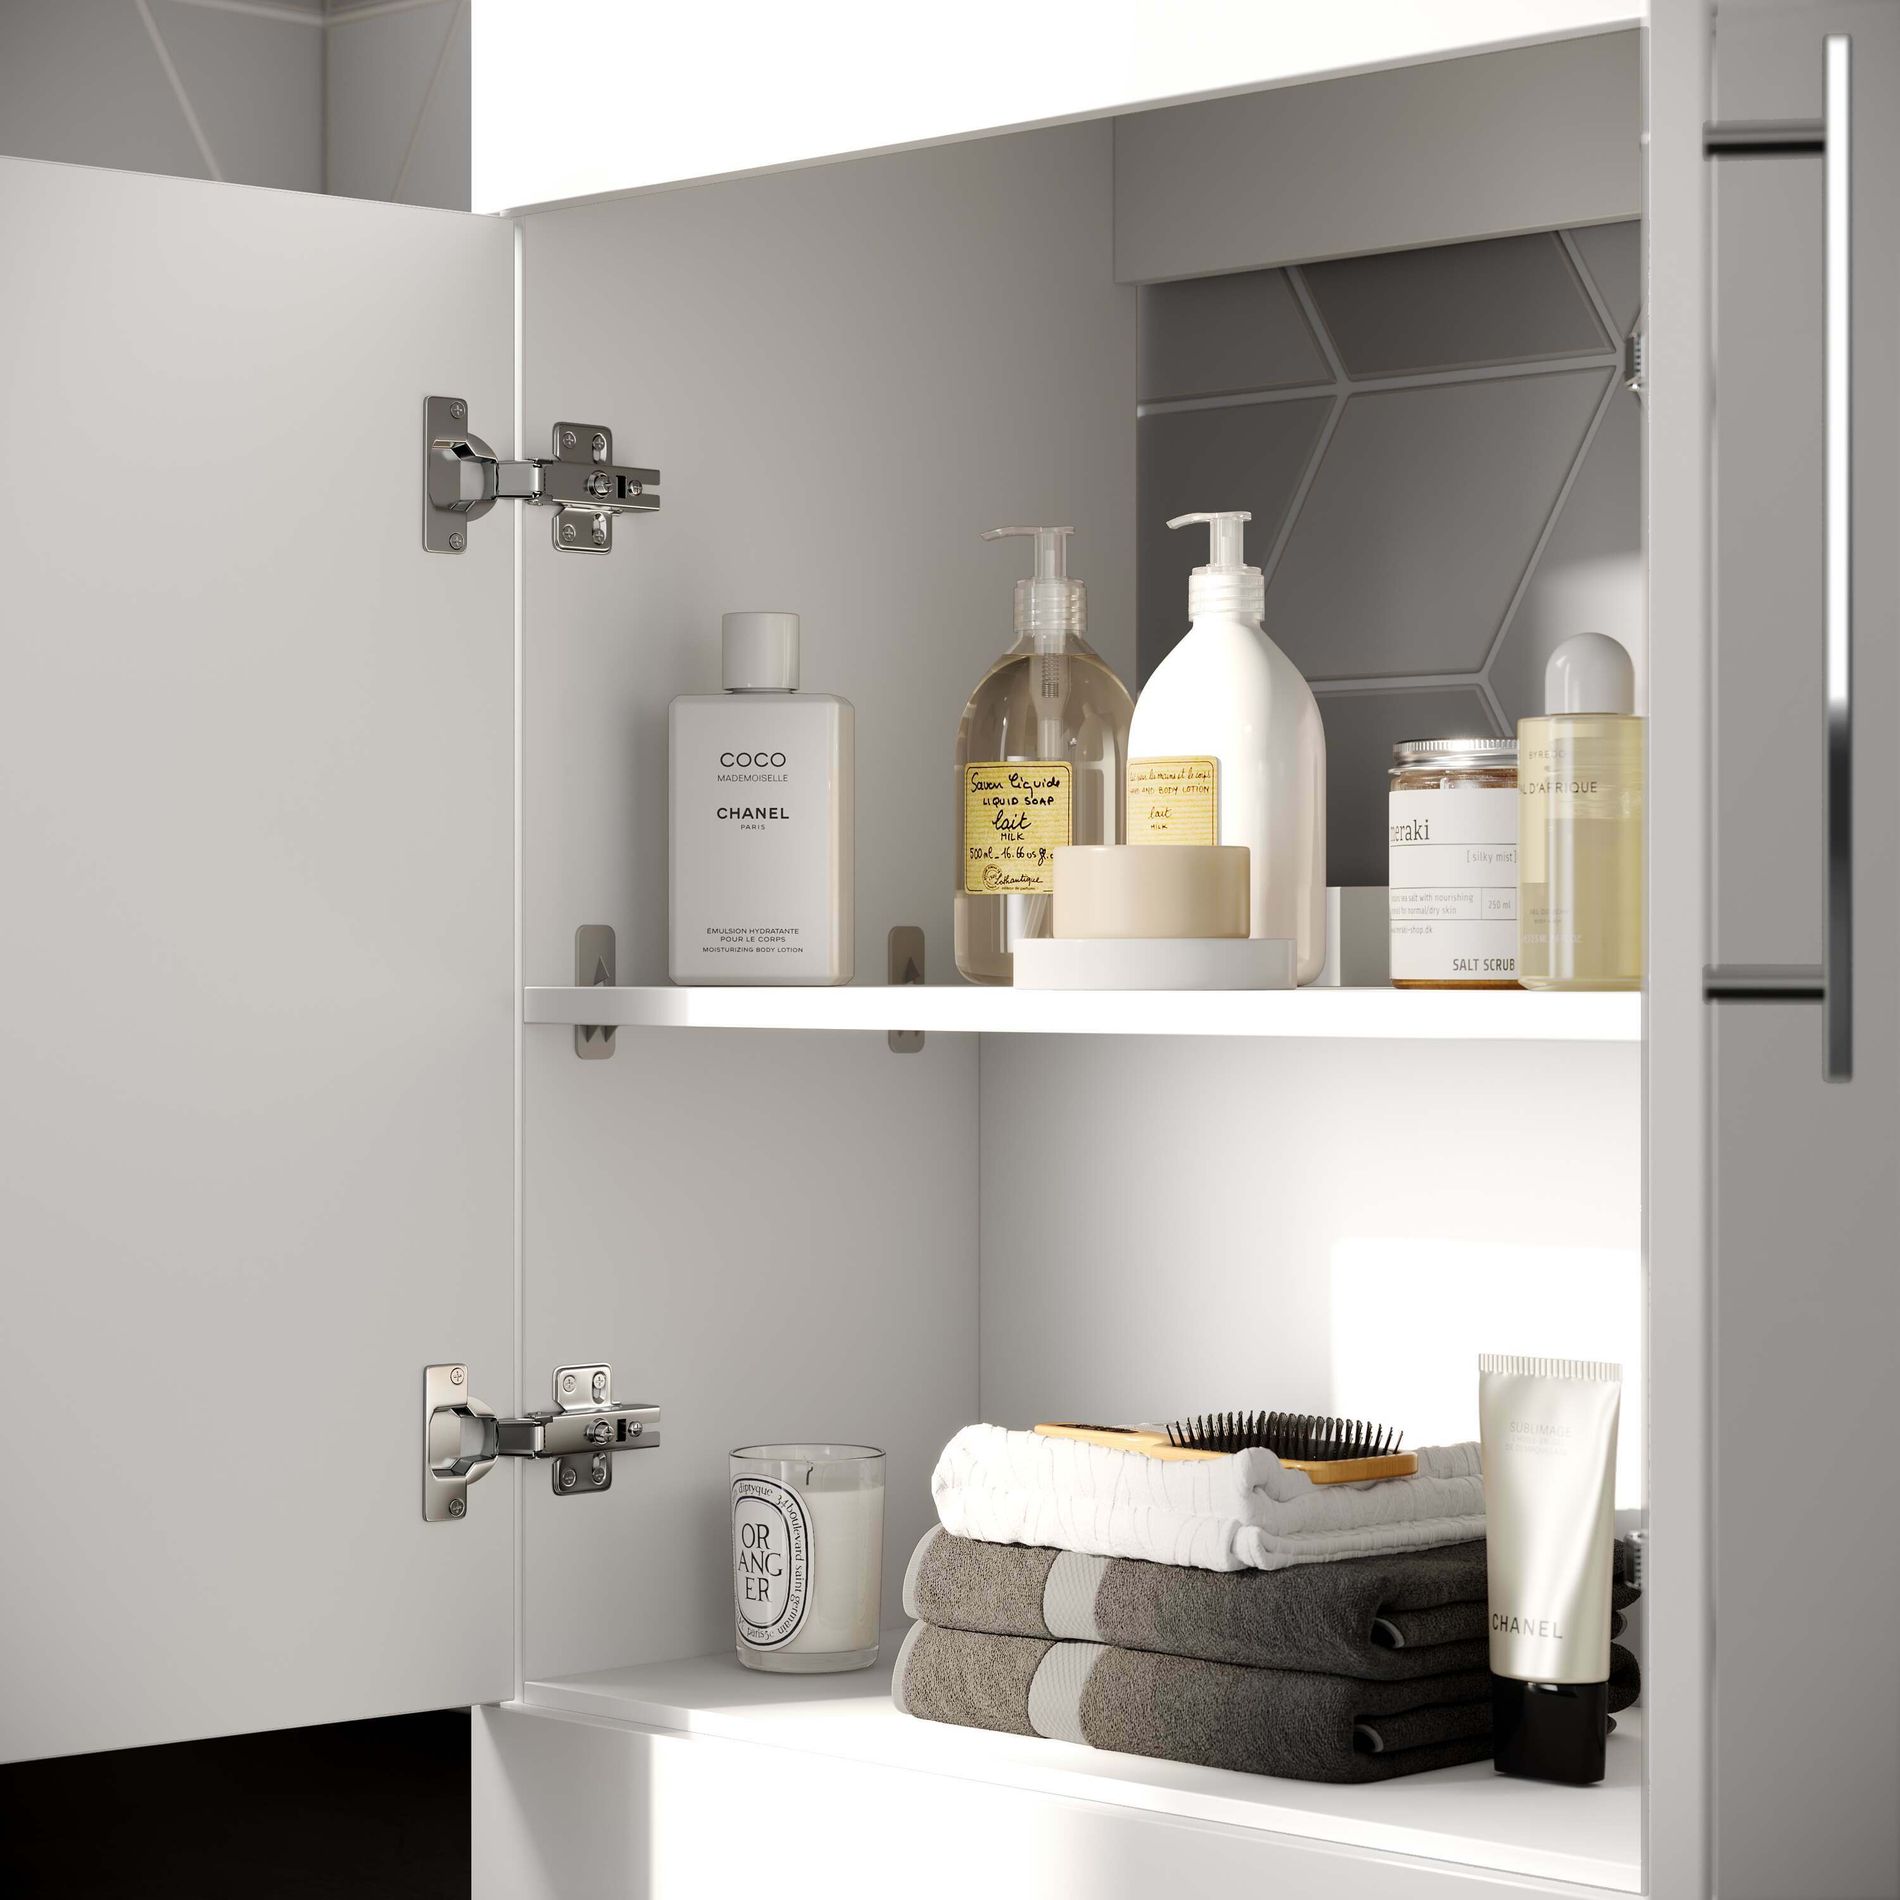 https://www.bathroommountain.co.uk/img/1900/1900/resize/catalog/product/c/7/c76473-1200-avon-gloss-white-basin-vanity-600mm.jpg